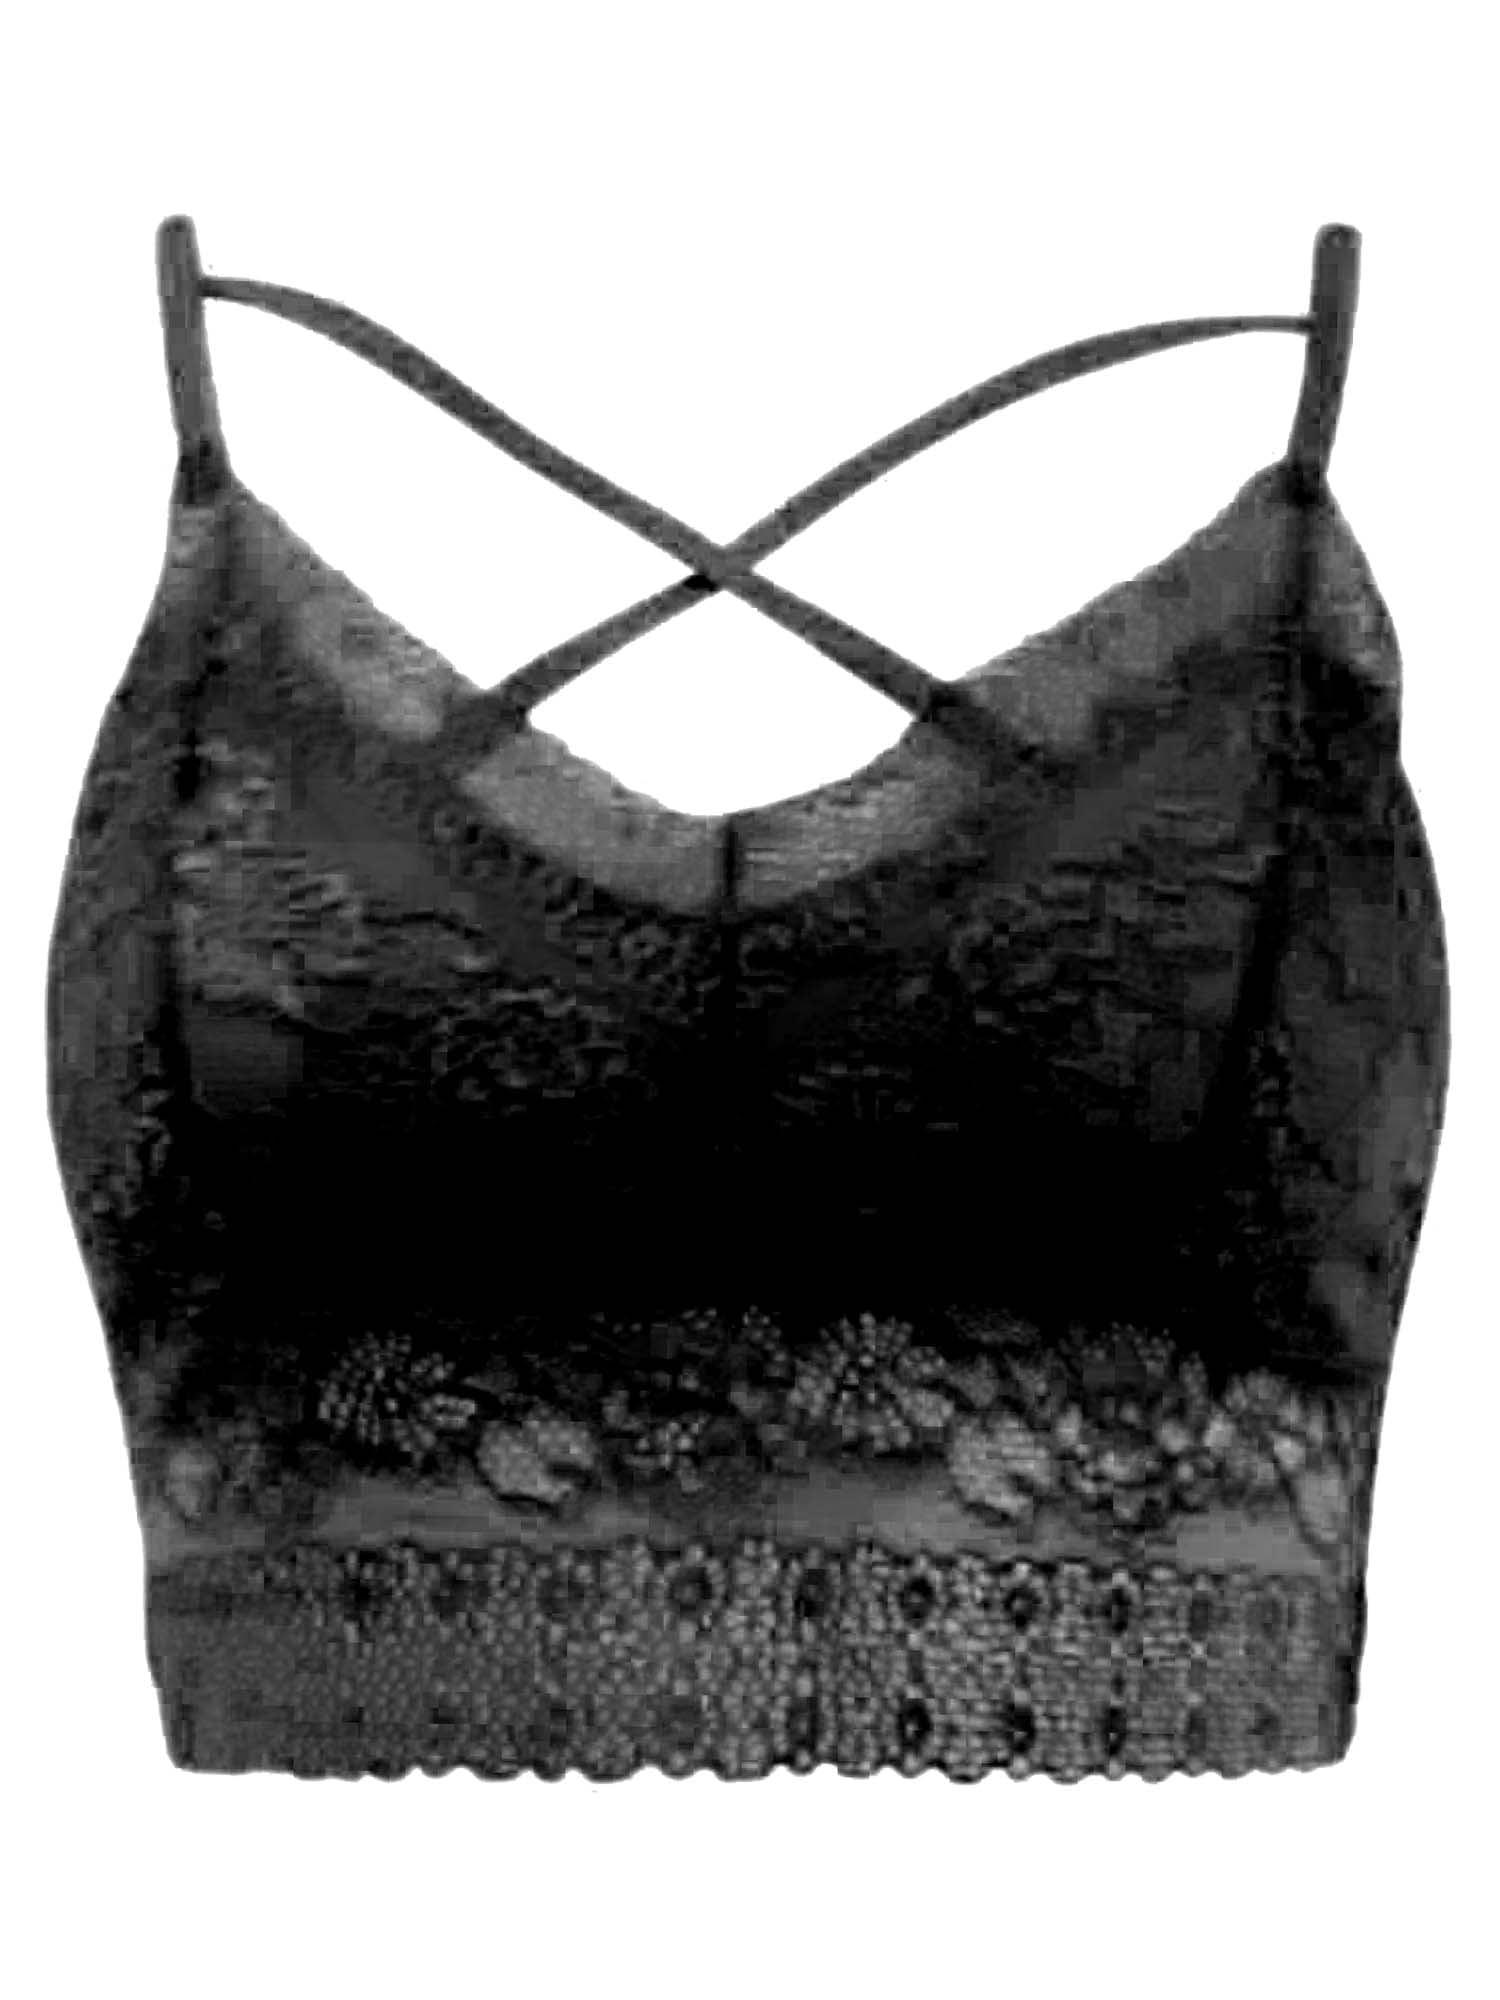 Black Lace Bralette With Front Detail Size Medium